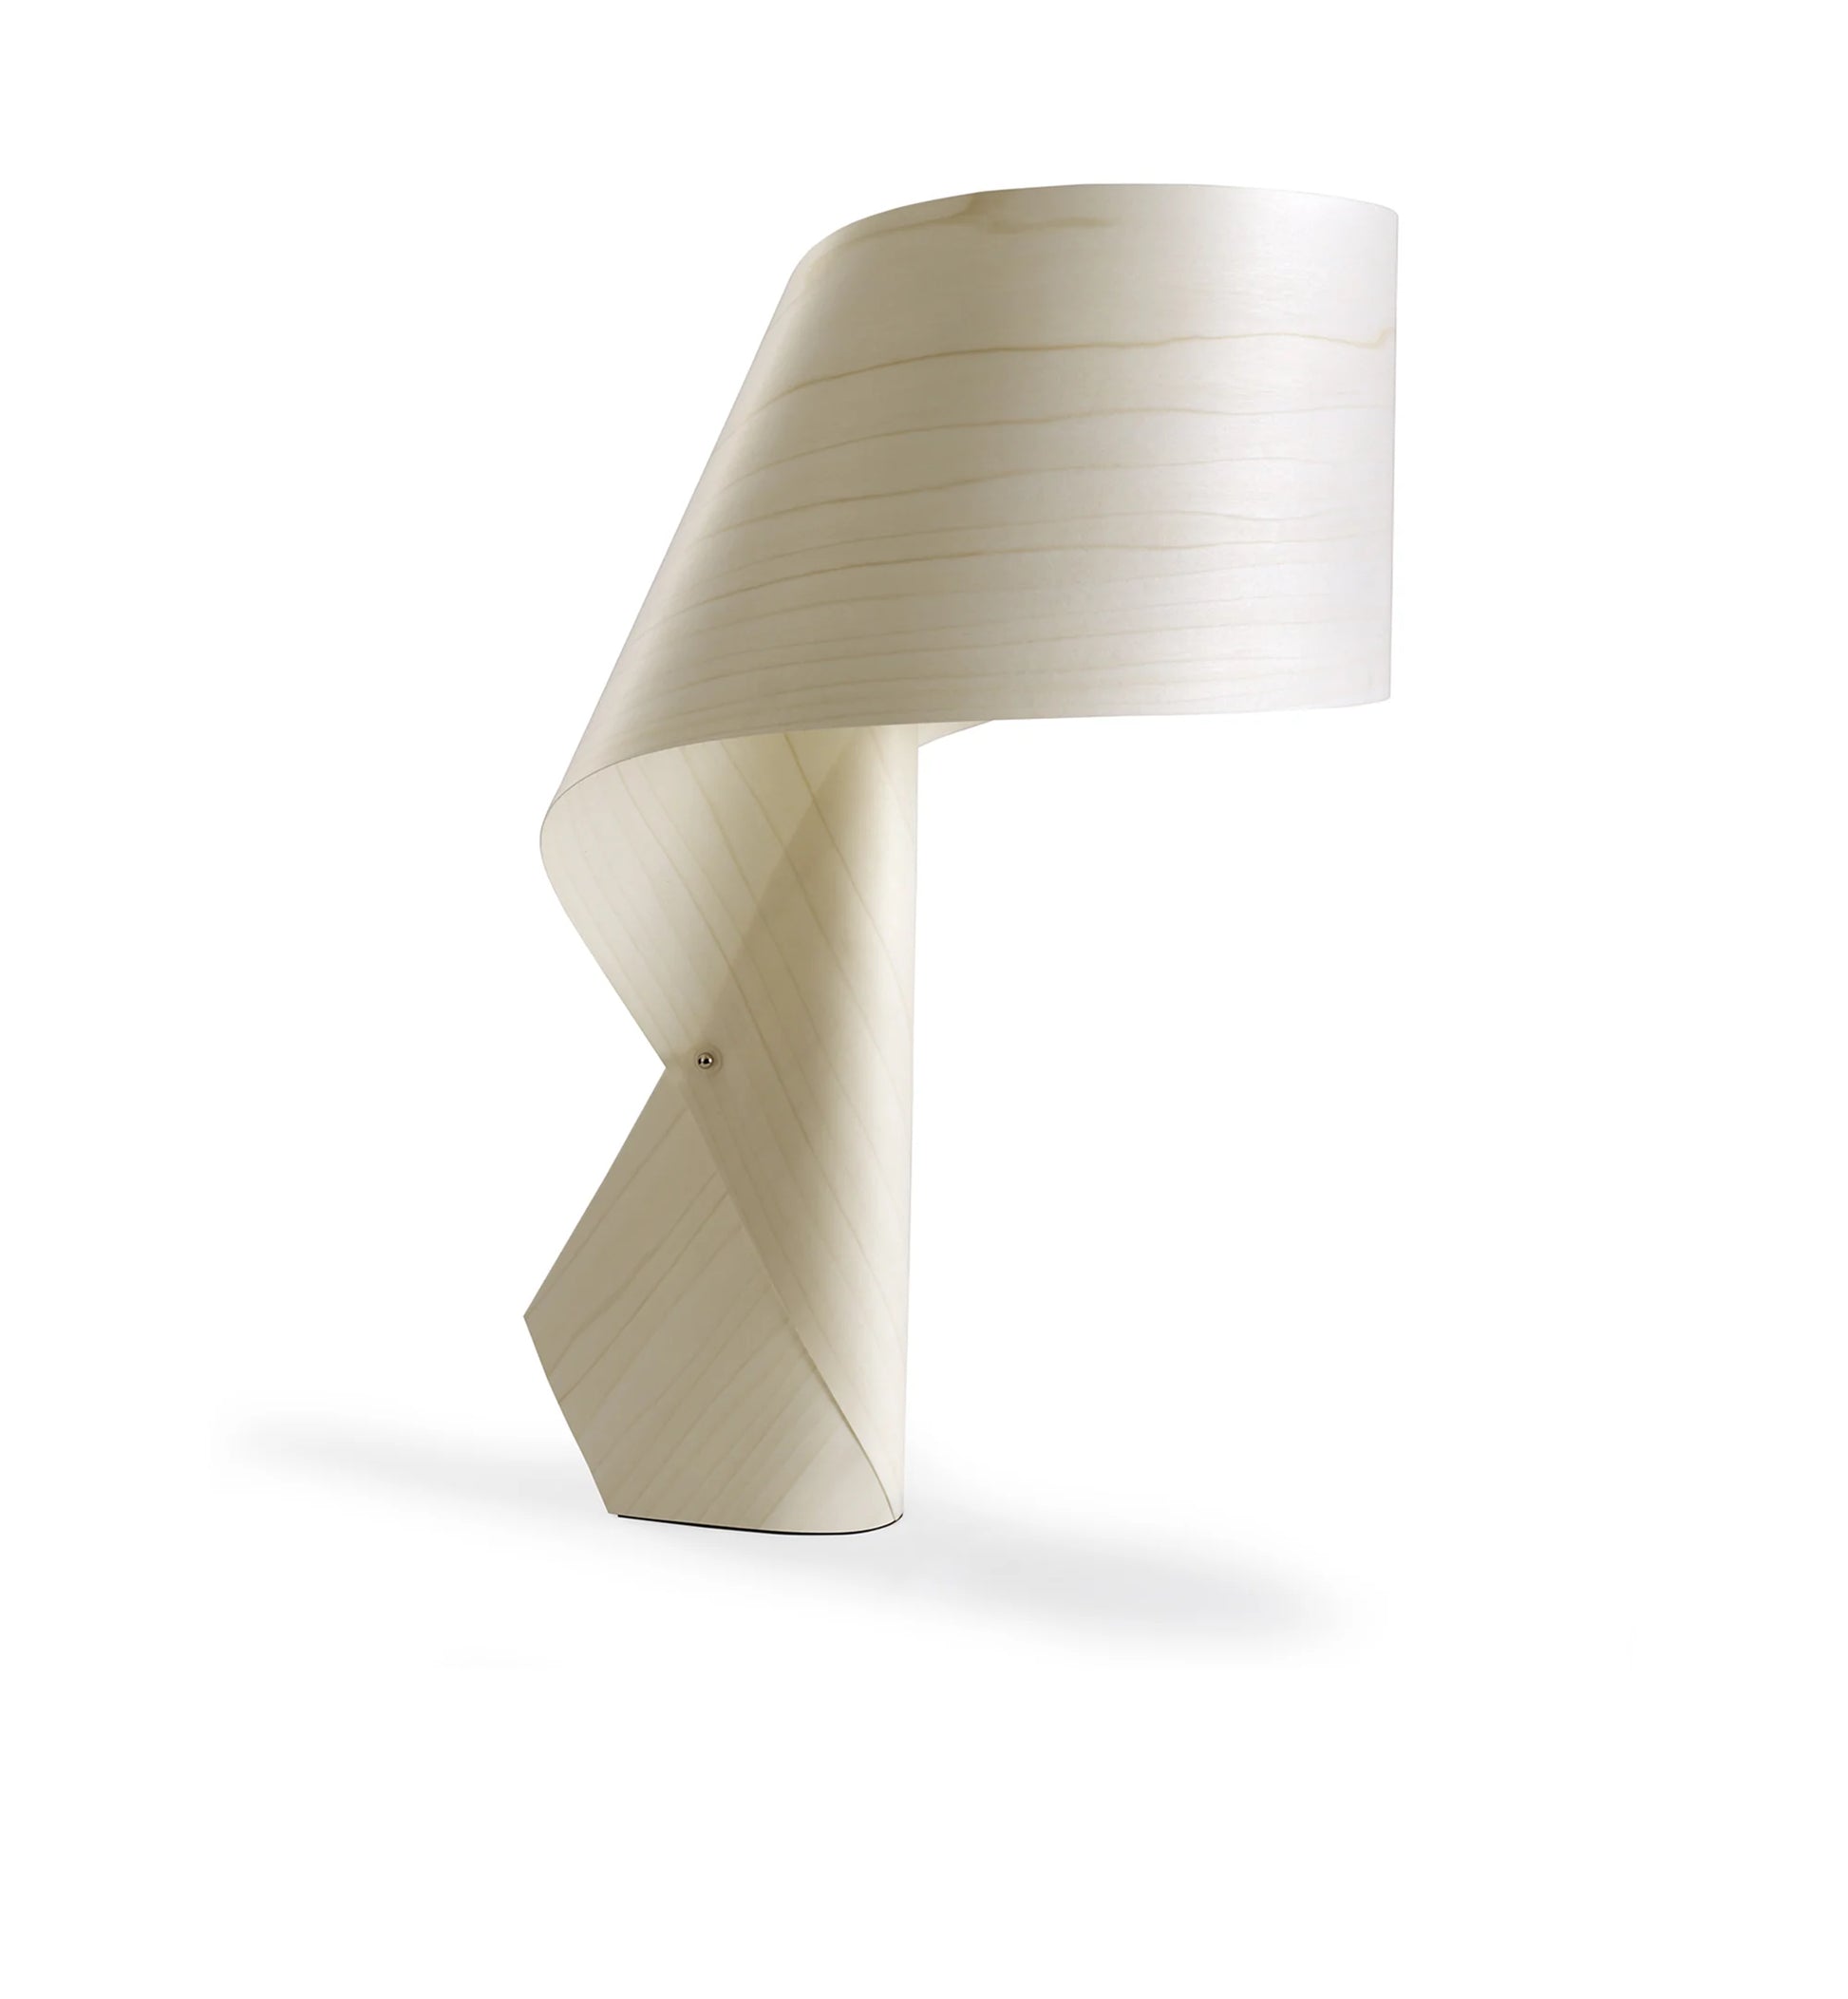 white natural wood veneer table lamp. best table light. sustainable table lamp design